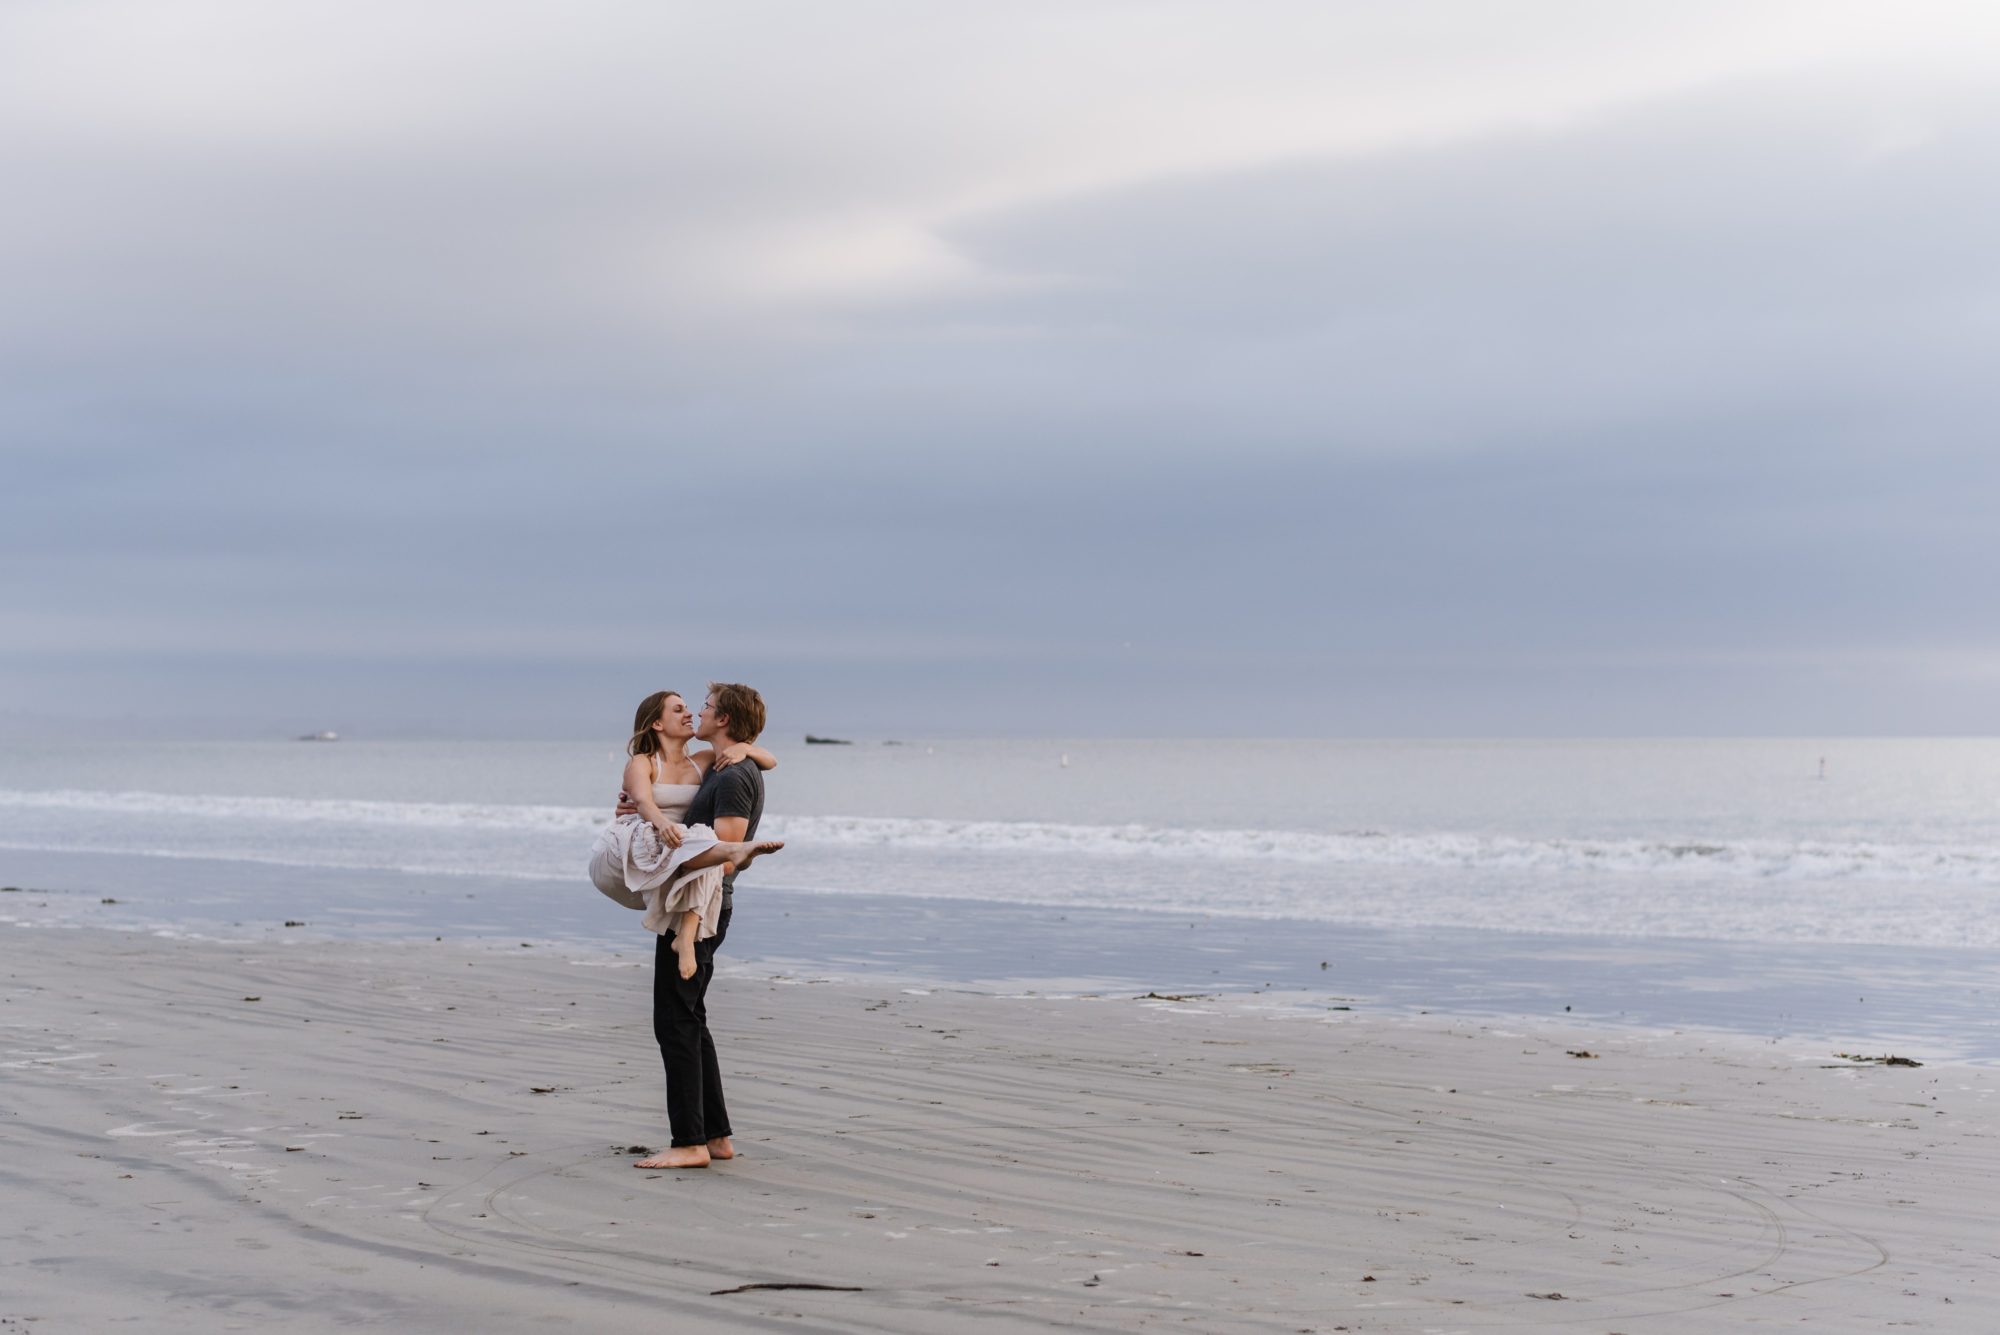 Man holding woman on beach in San Luis Obispo